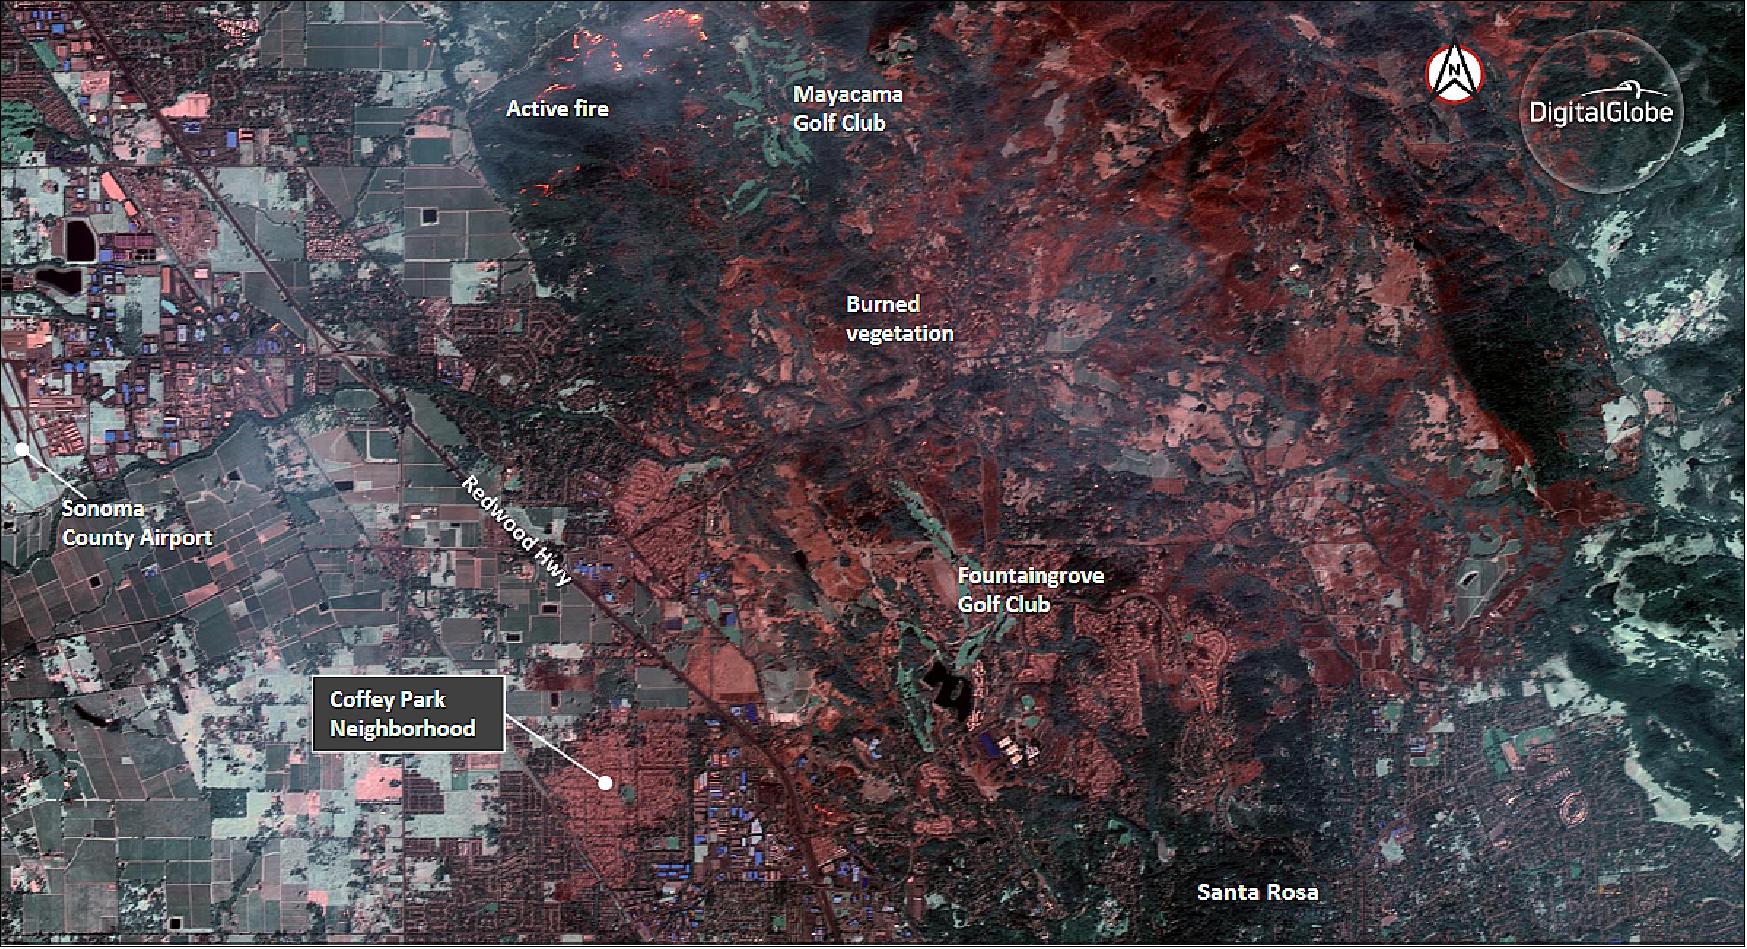 Figure 12: Northwest Santa Rosa and Coffee Park fires captured on October 10 by DigitalGlobe's WorldView-3 satellite (image credit: DigitalGlobe) 24)